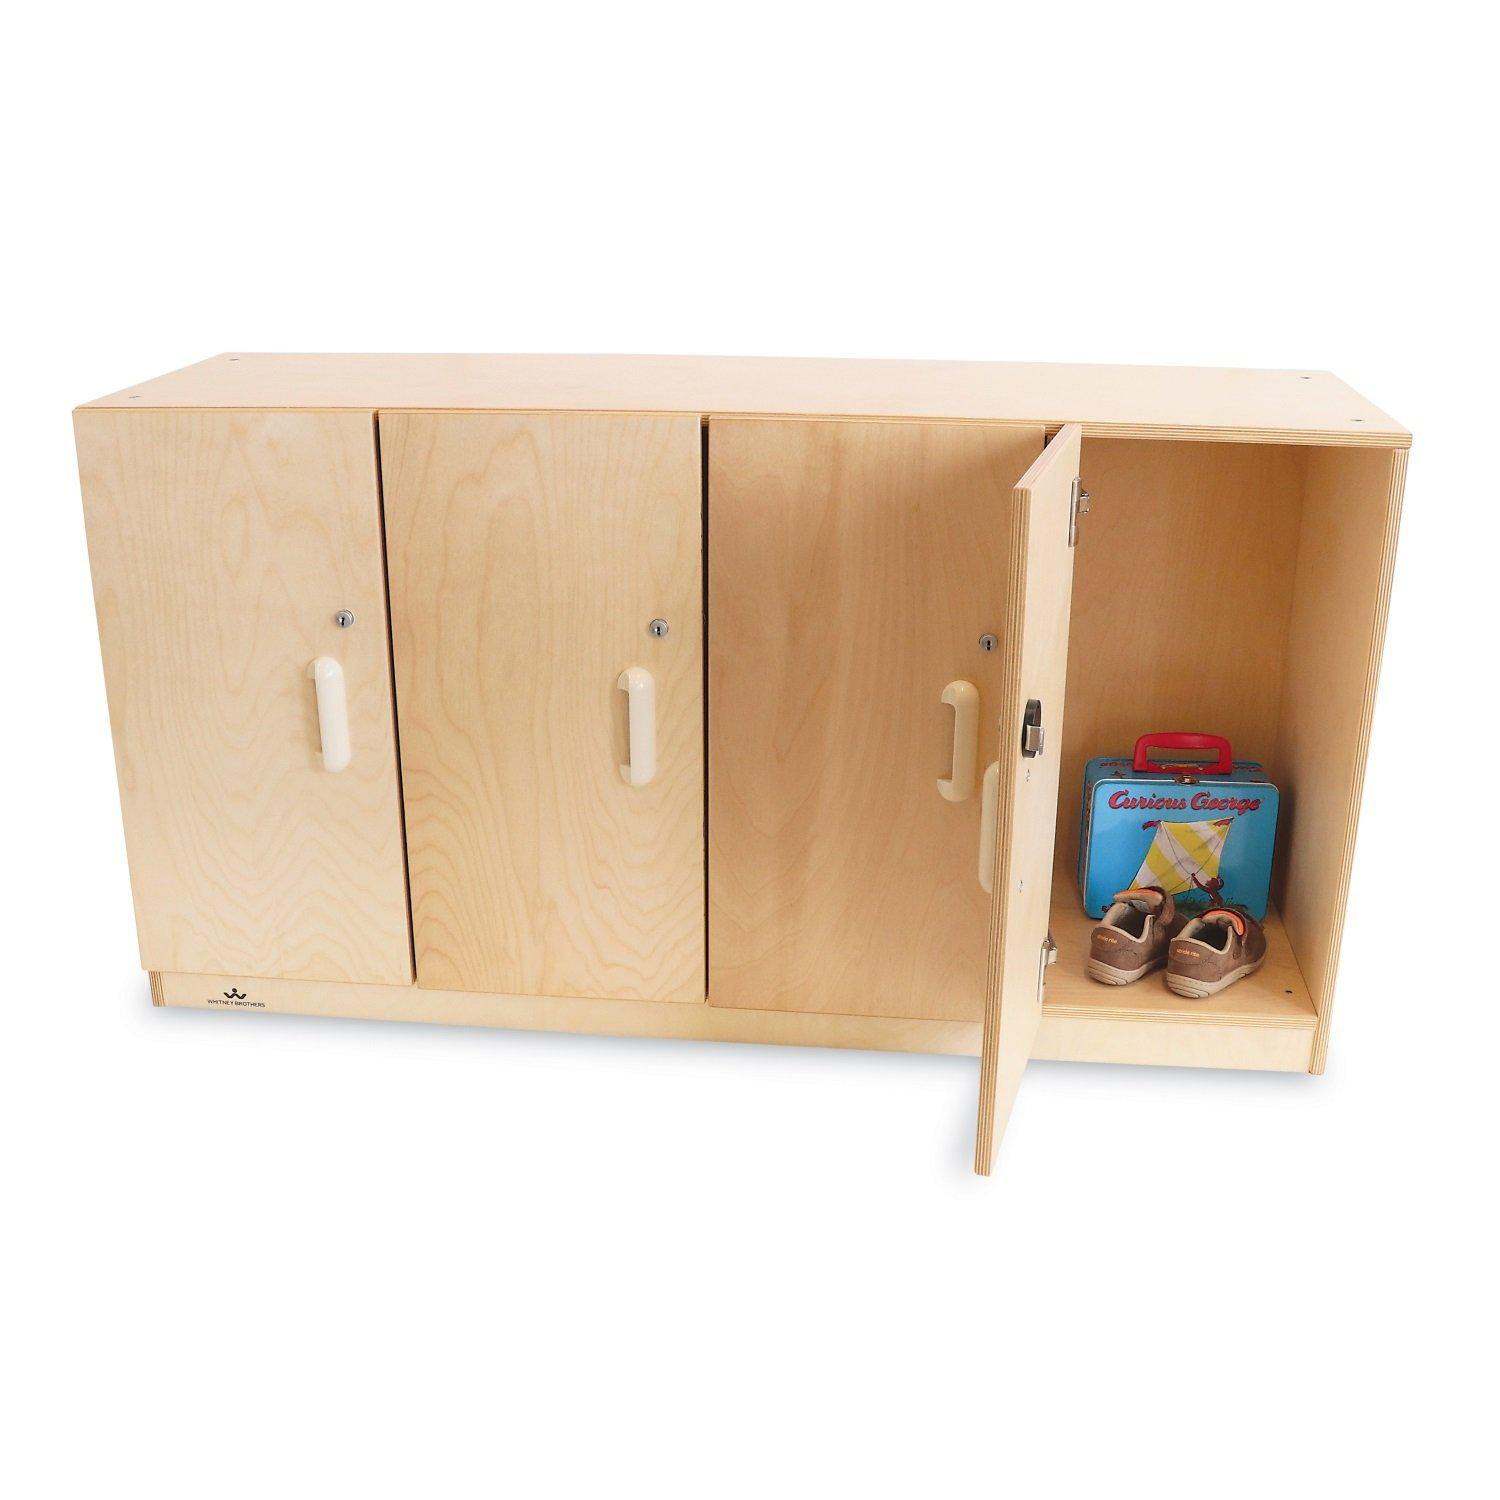 Pre-School Storage Tagged Backpack Storage - NextGen Furniture, Inc.